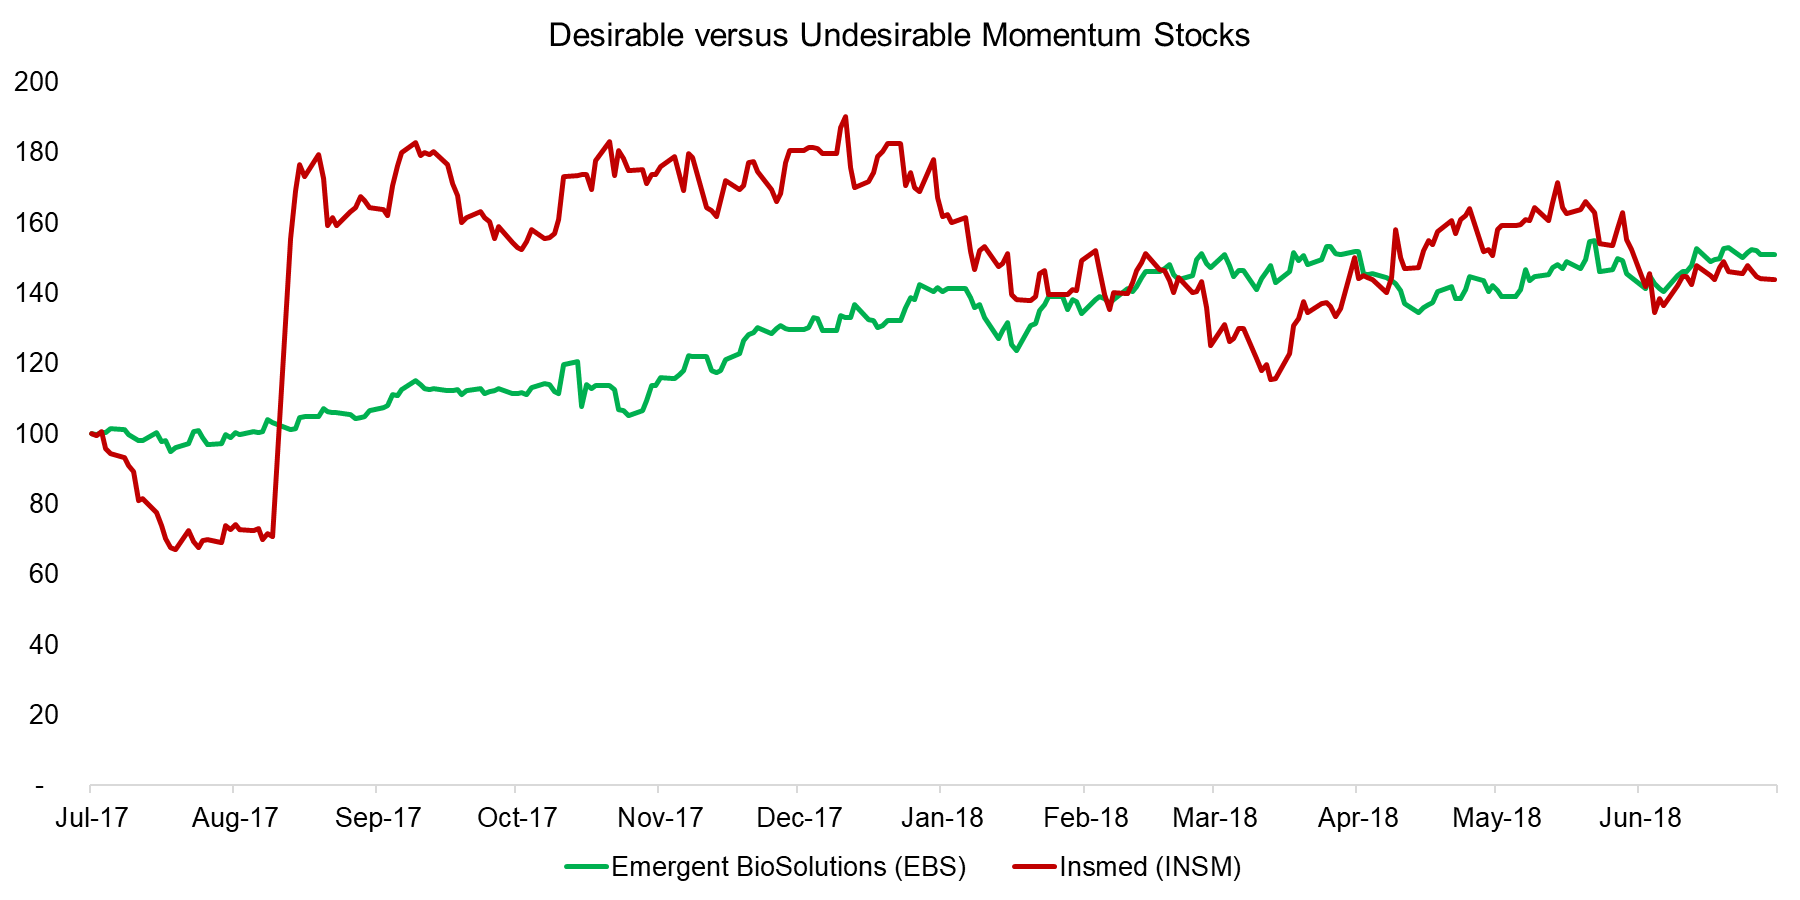 Desirable versus Undesirable Momentum Stocks